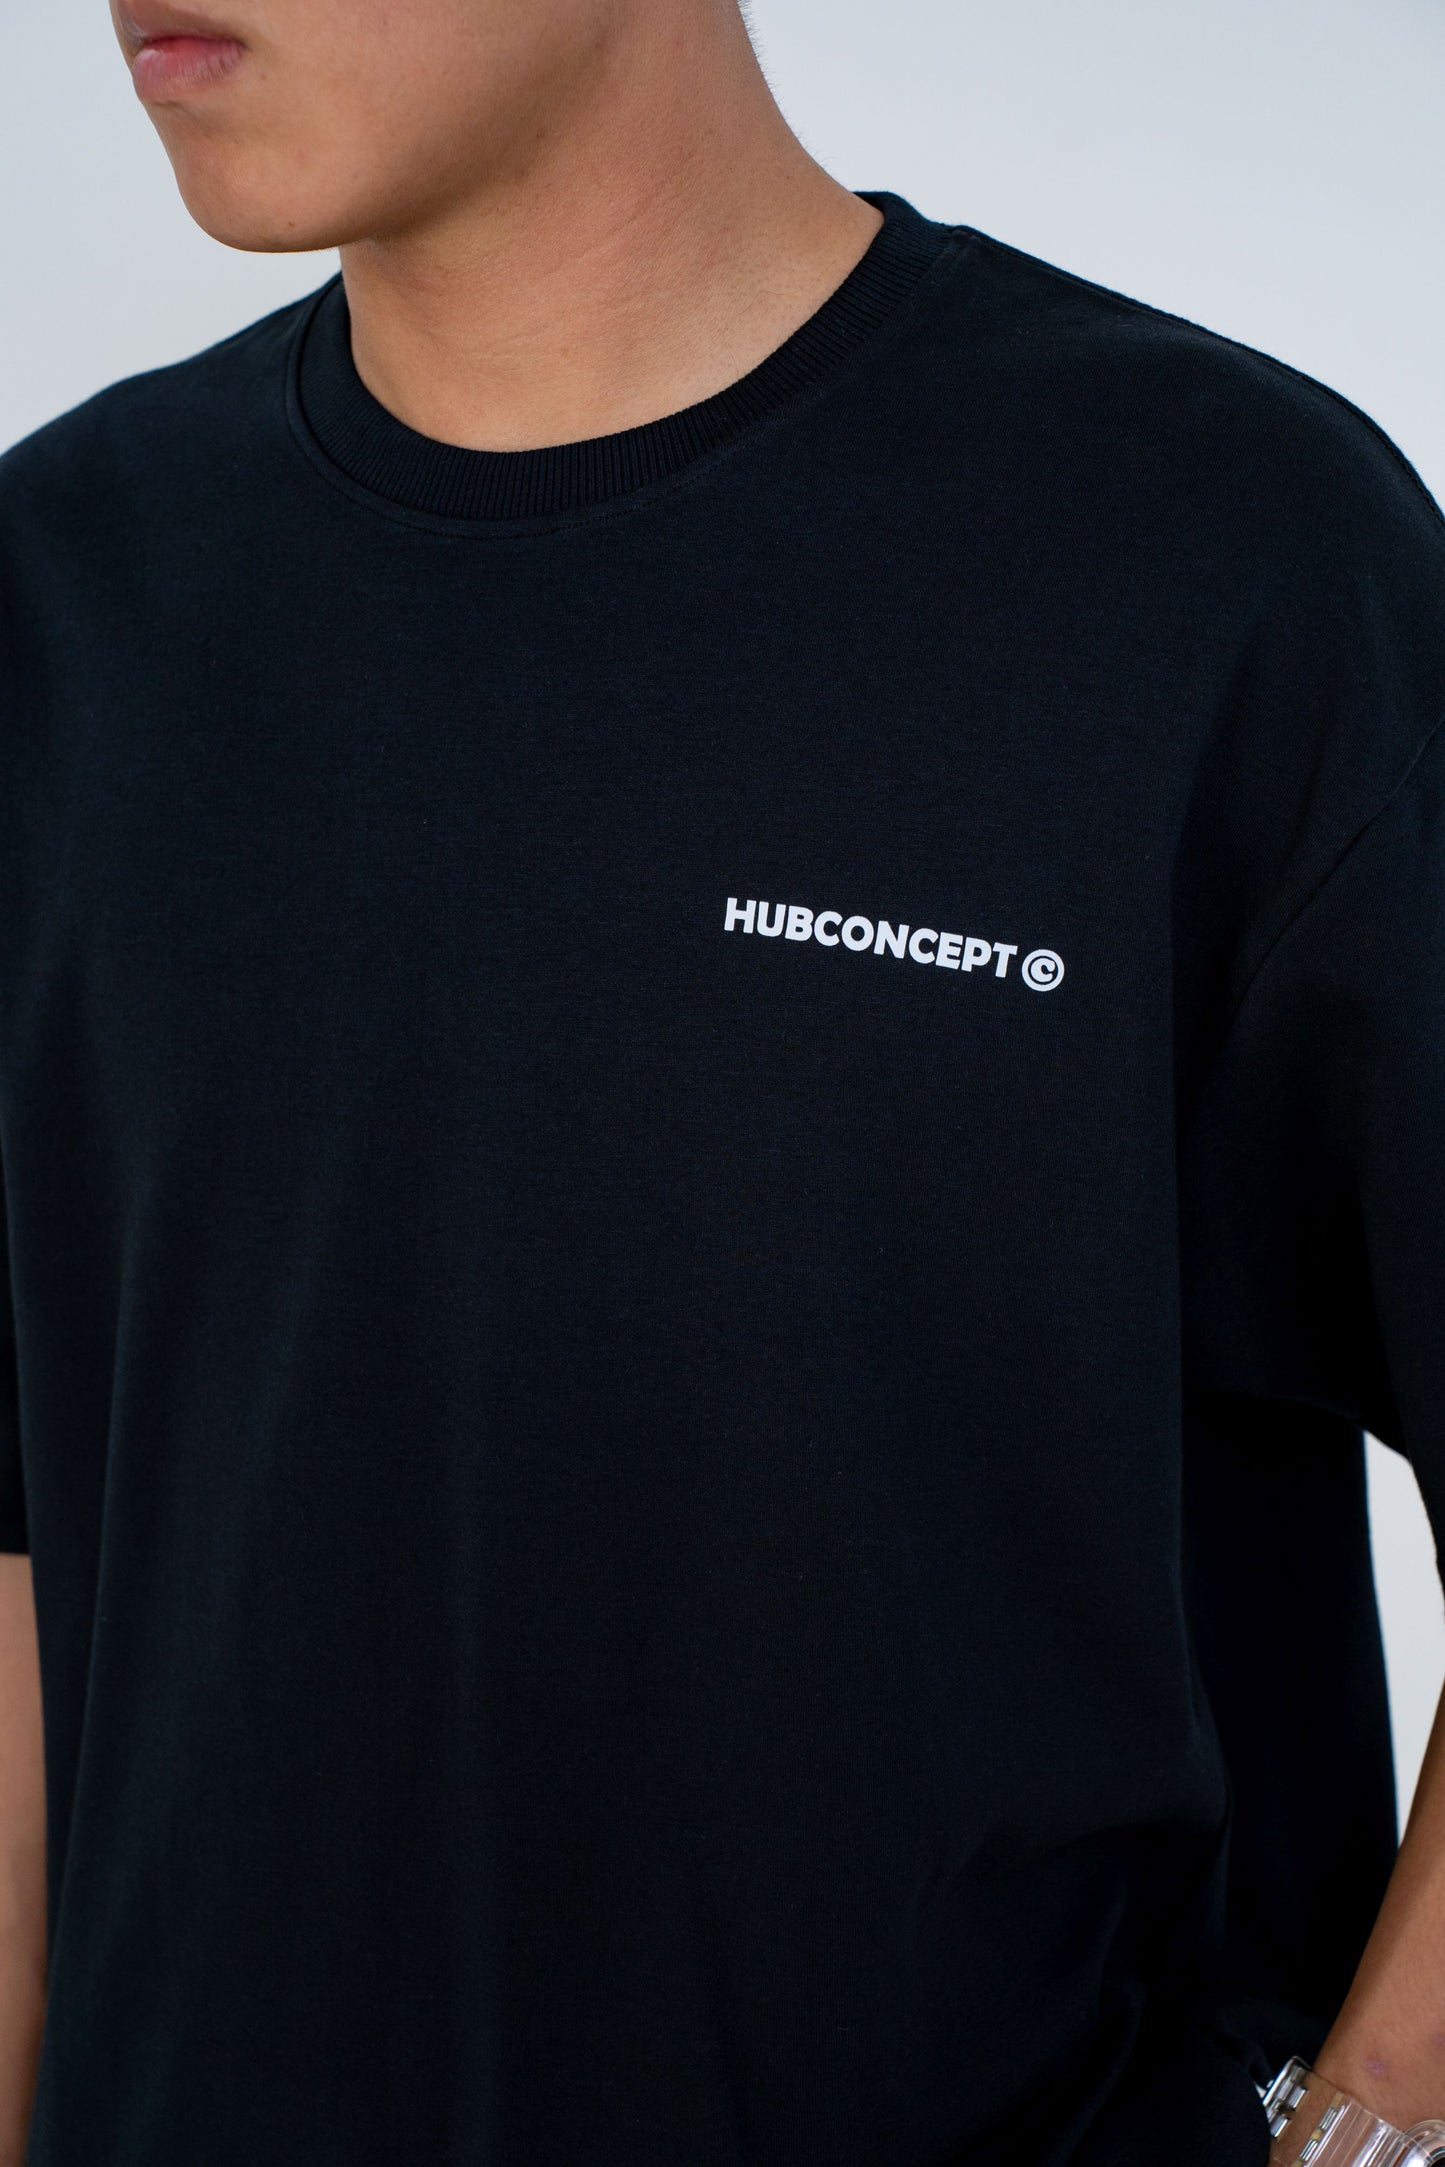 Hubconcept Logo Tee - Black